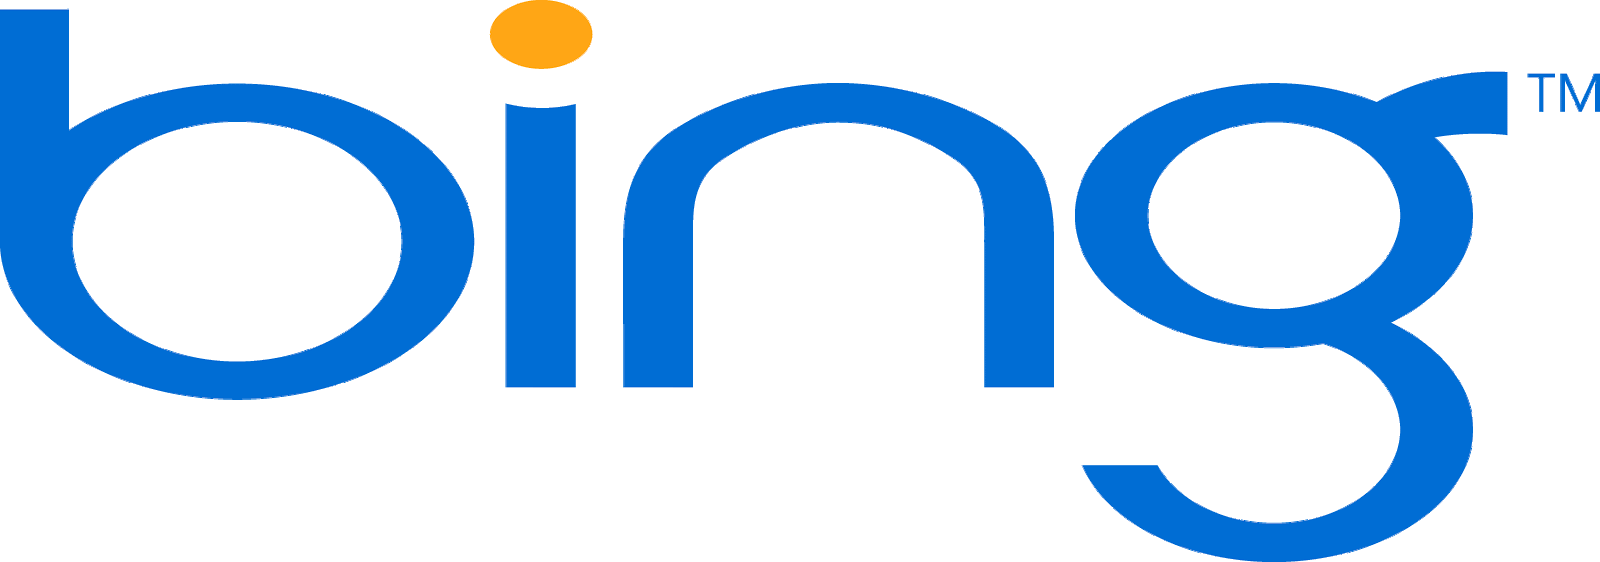 Bing-logo.aspx